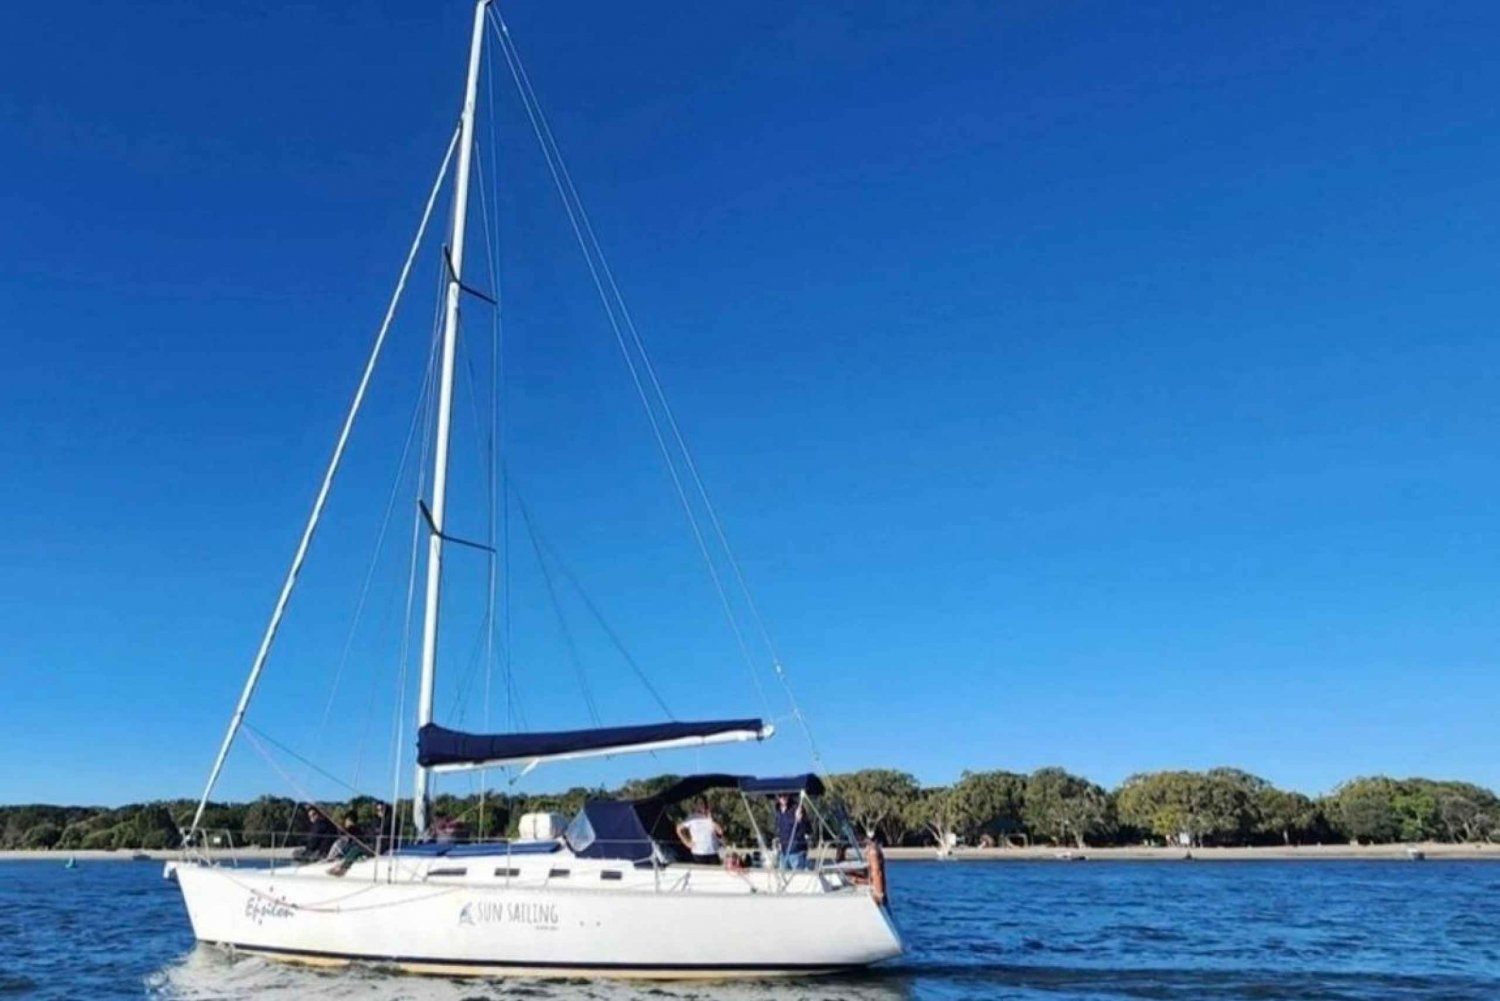 Gold Coast: Crociera pomeridiana in barca a vela con cibo e bevande incluse